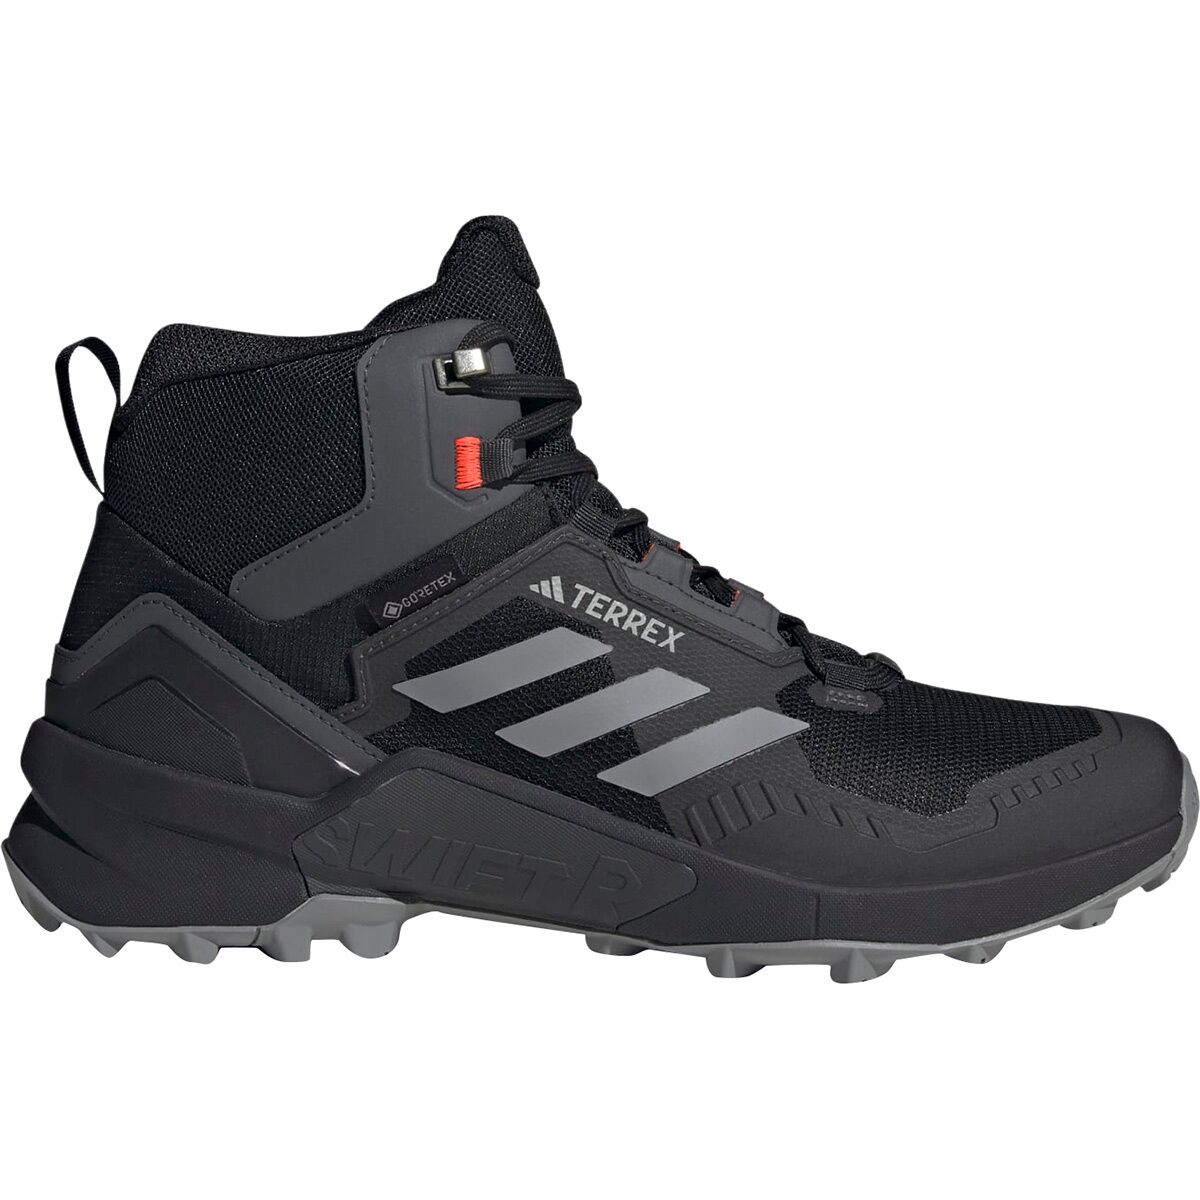 Adidas TERREX Terrex Swift R2 Mid GTX Hiking Shoe - Men's